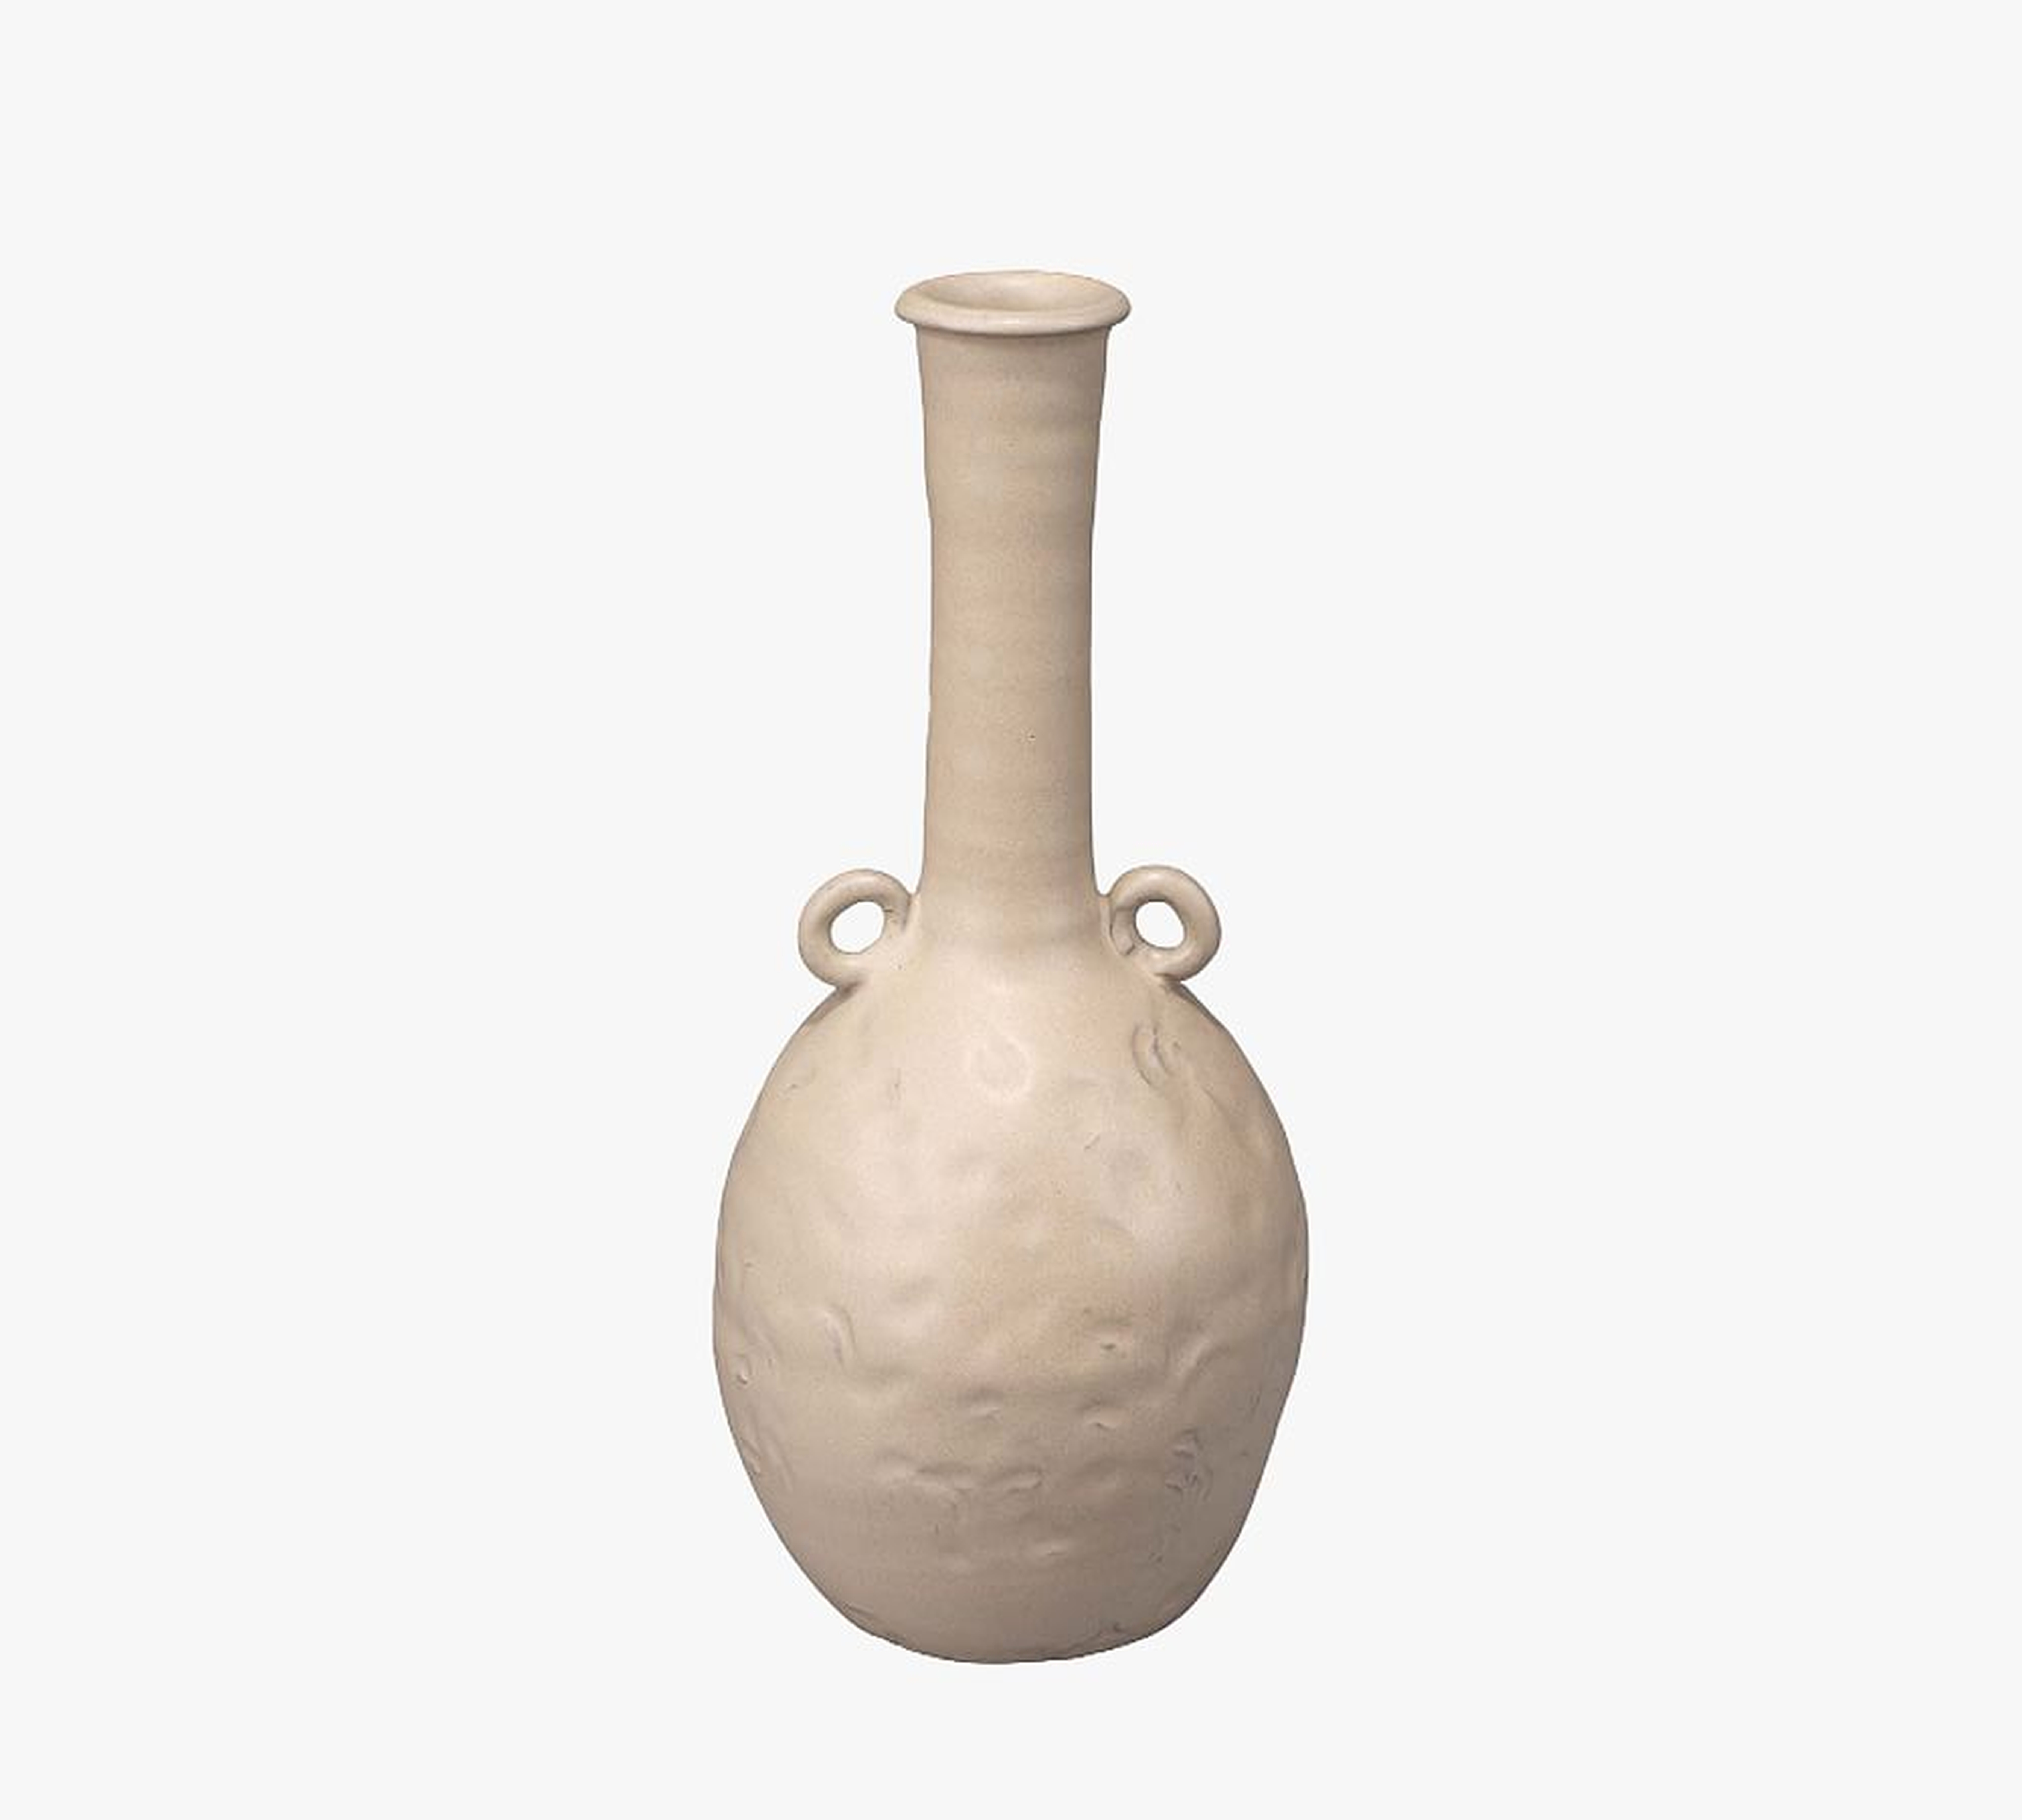 Lennon Handcrafted Ceramic Vase, 12"H - Pottery Barn